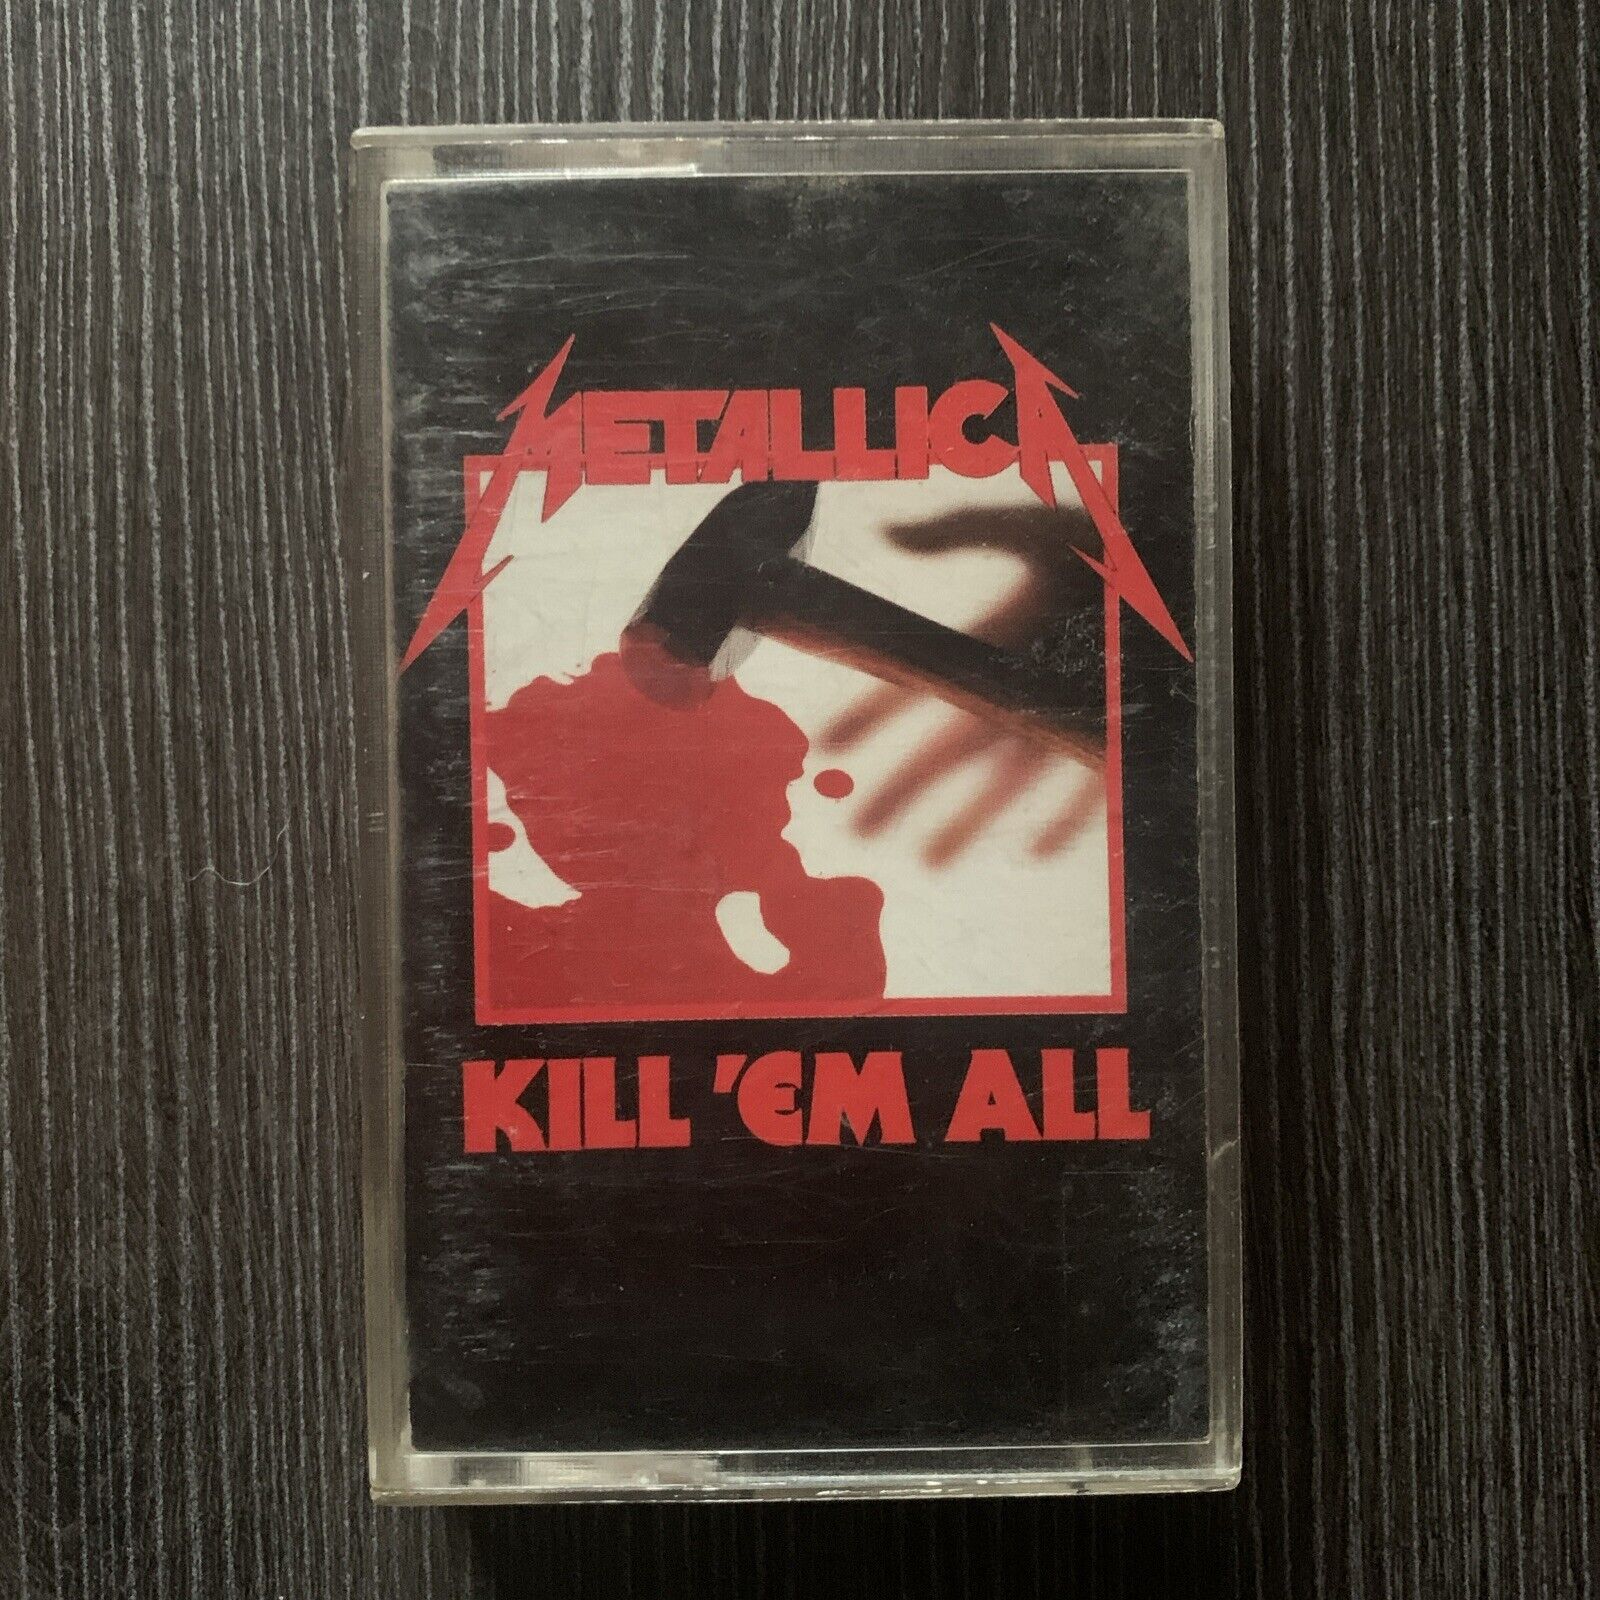 Kill 'Em All by Metallica (Cassette)